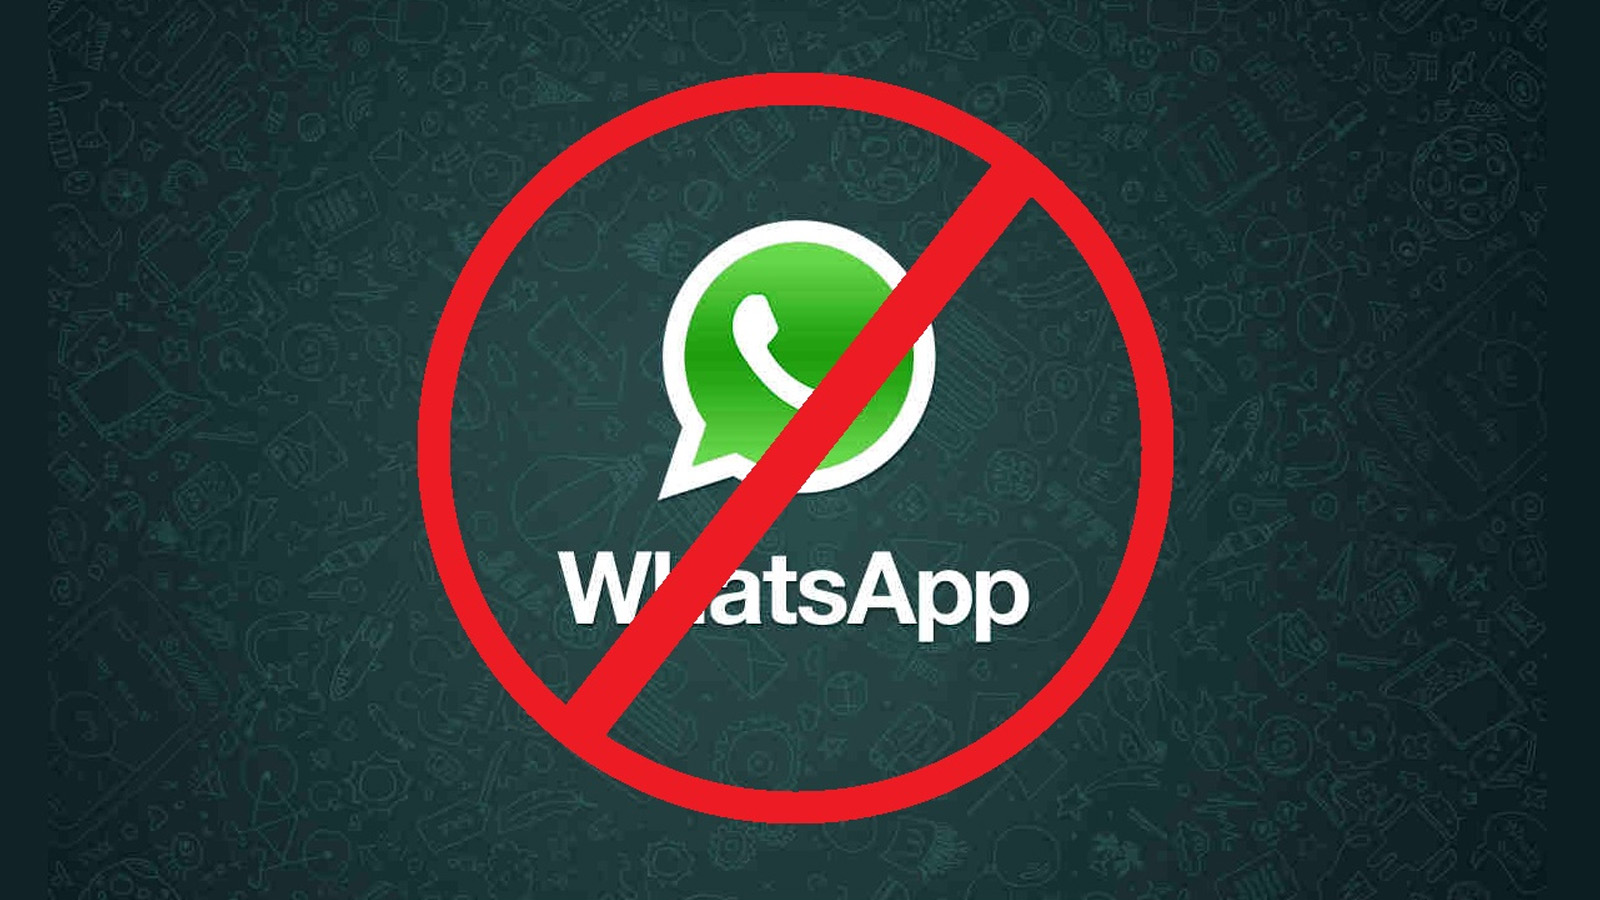 whatsapp ban